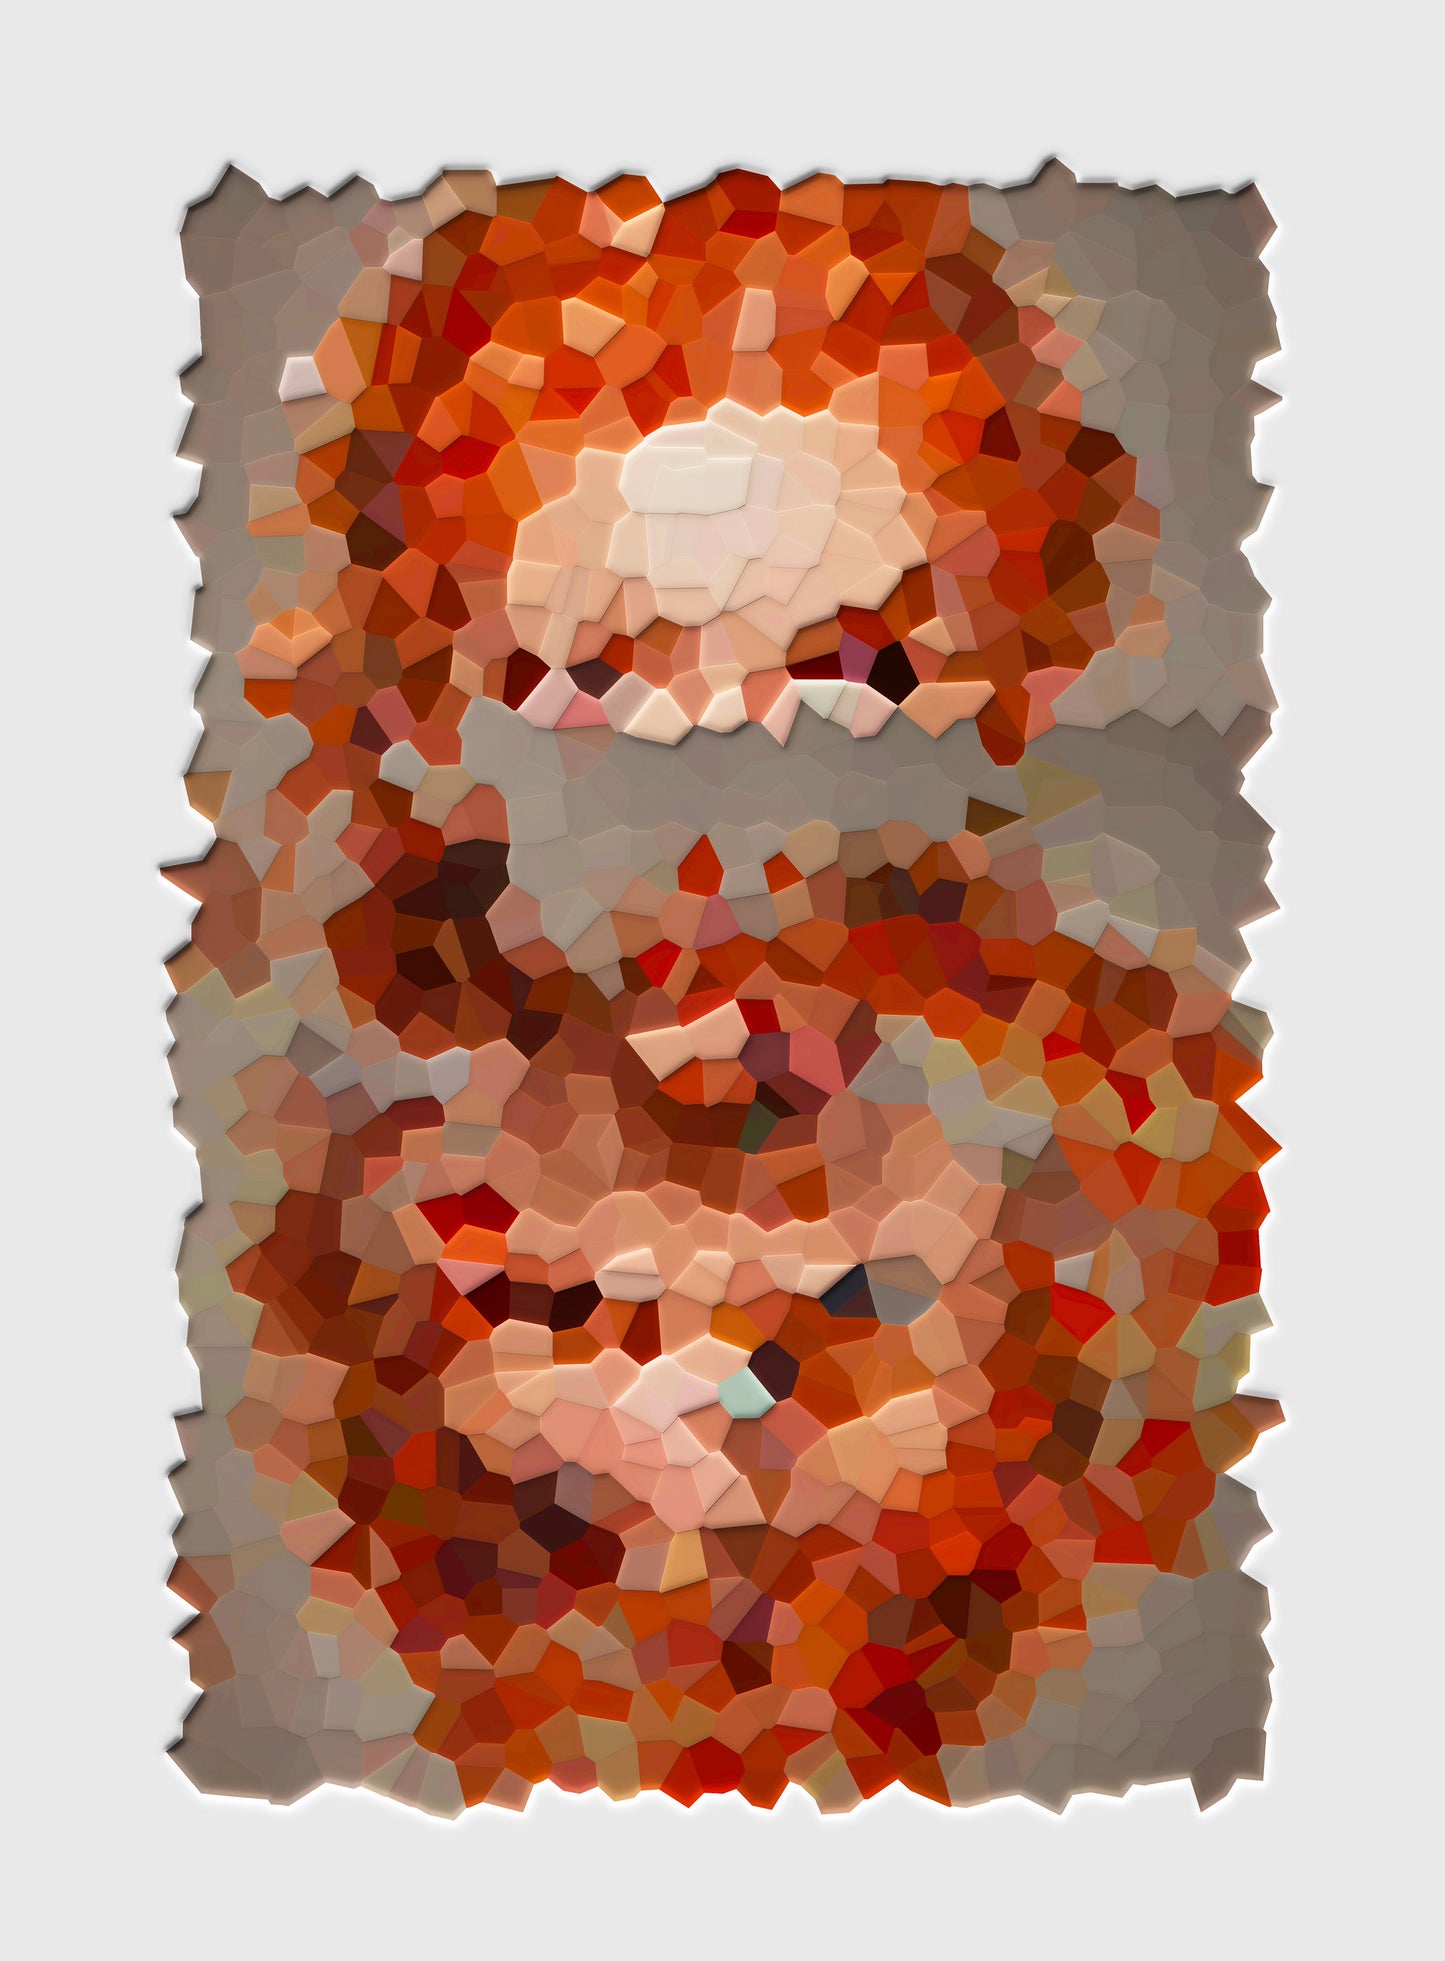 The Imaginary Portrait #119 - Ginger